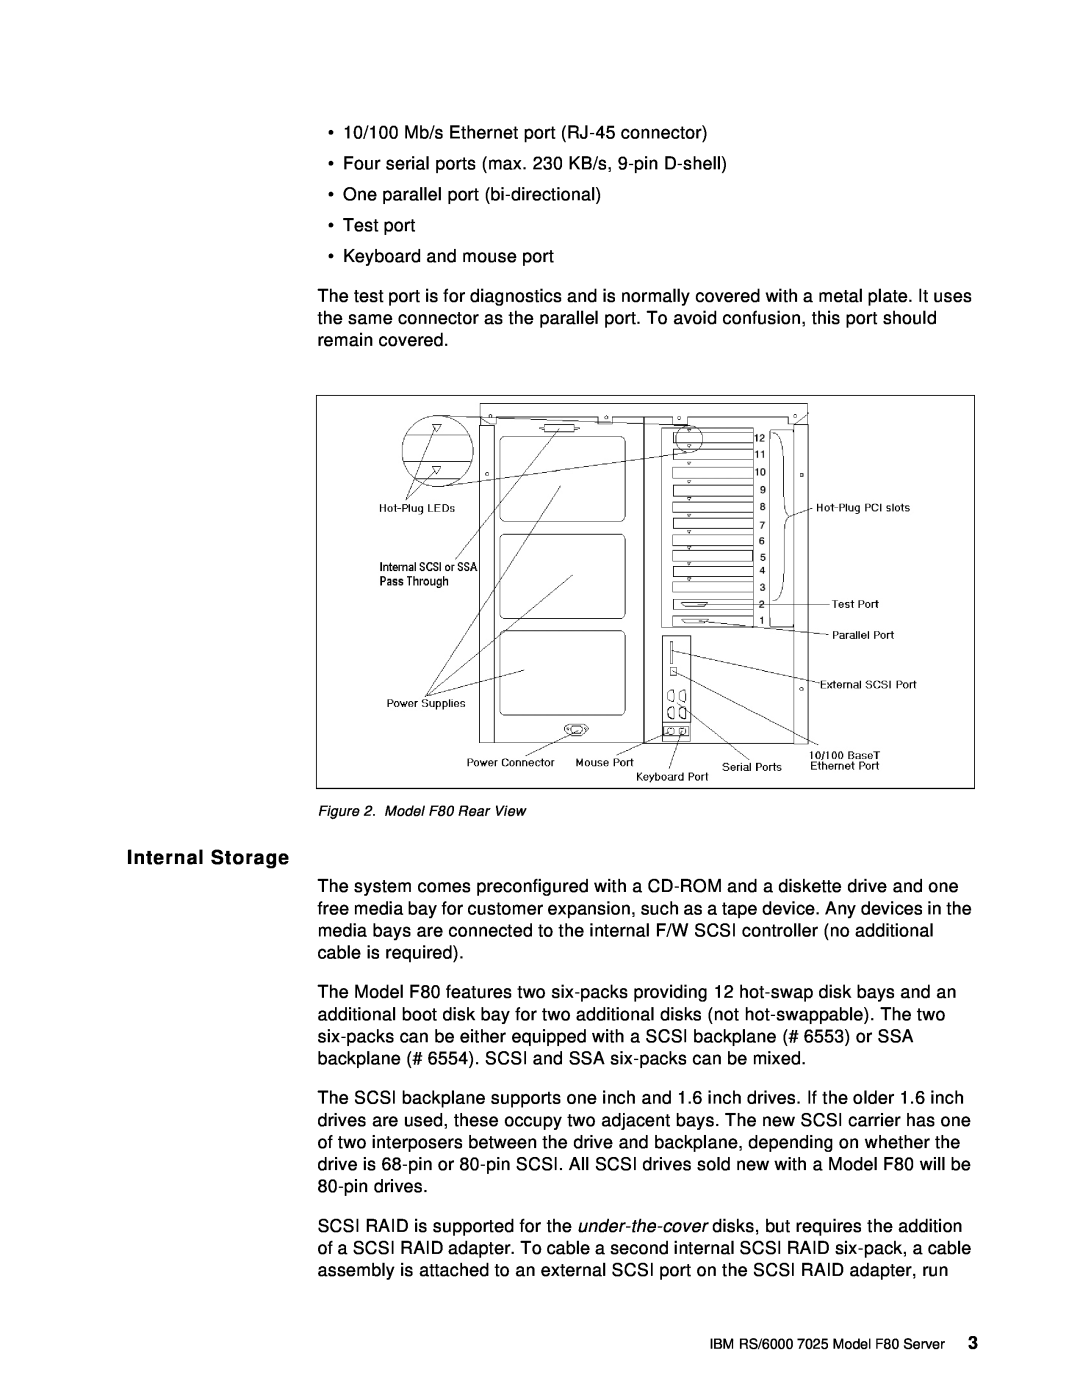 IBM F80 manual Internal Storage 